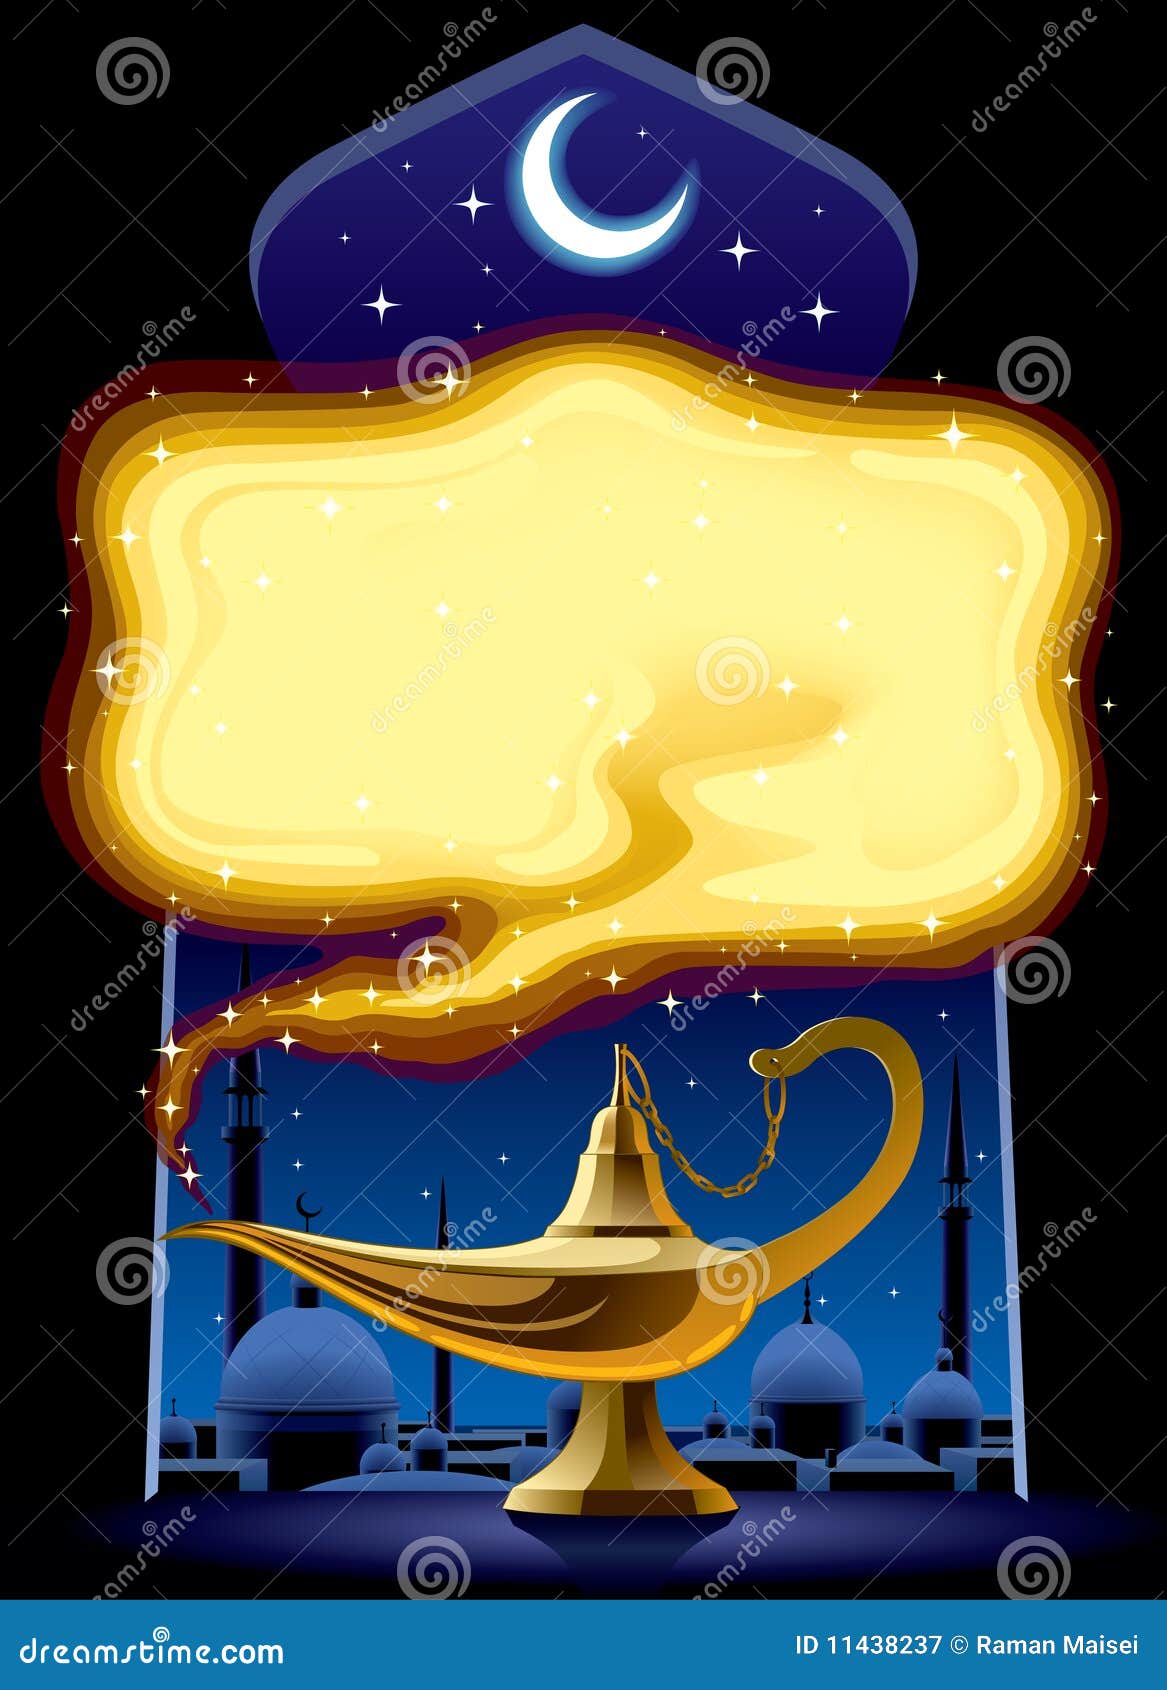 aladdin's magic lamp